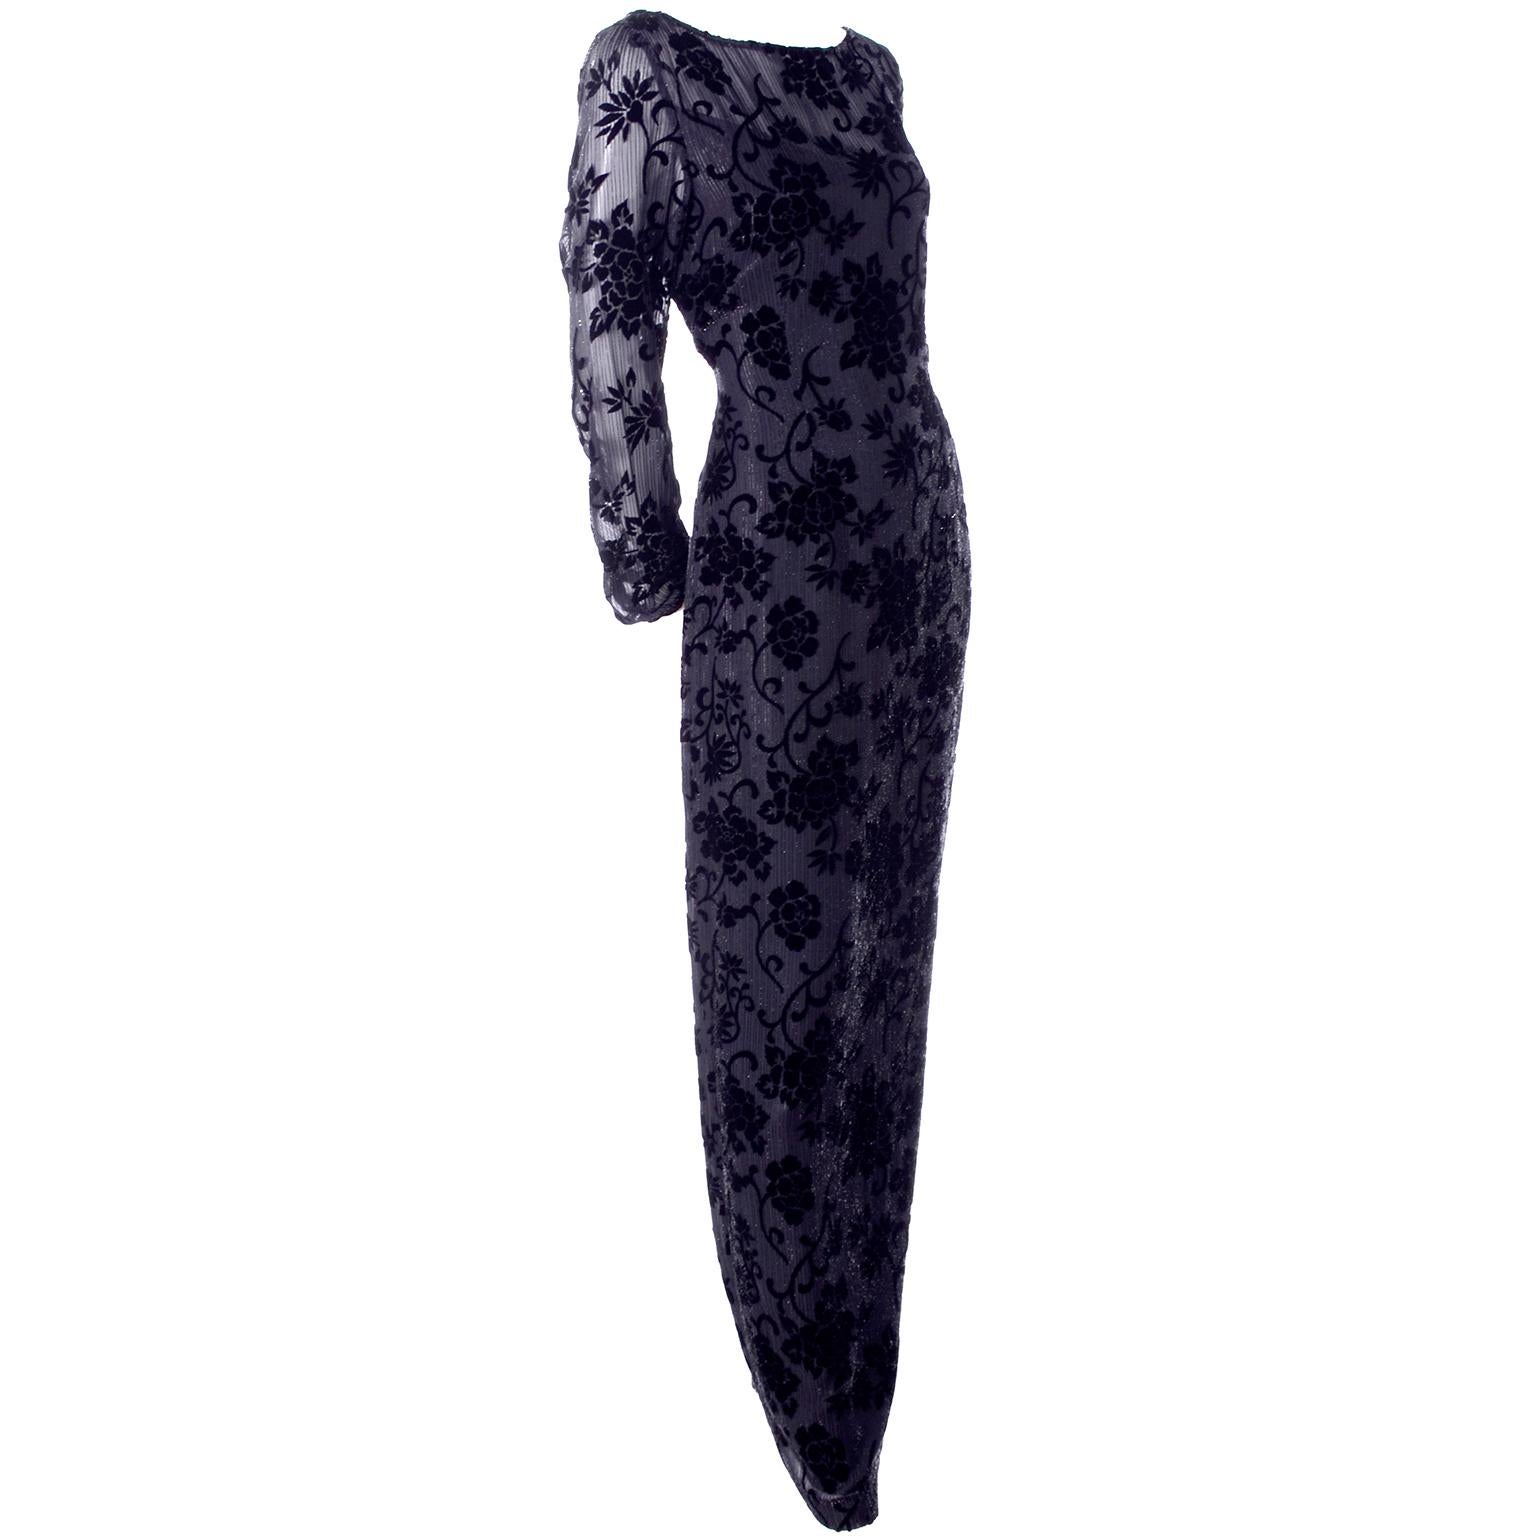 Vintage 1980s Black Velvet and Lace Dress 80s Silk Burnout Velvet Taffeta Party Dress Medium Drop-waist Frock